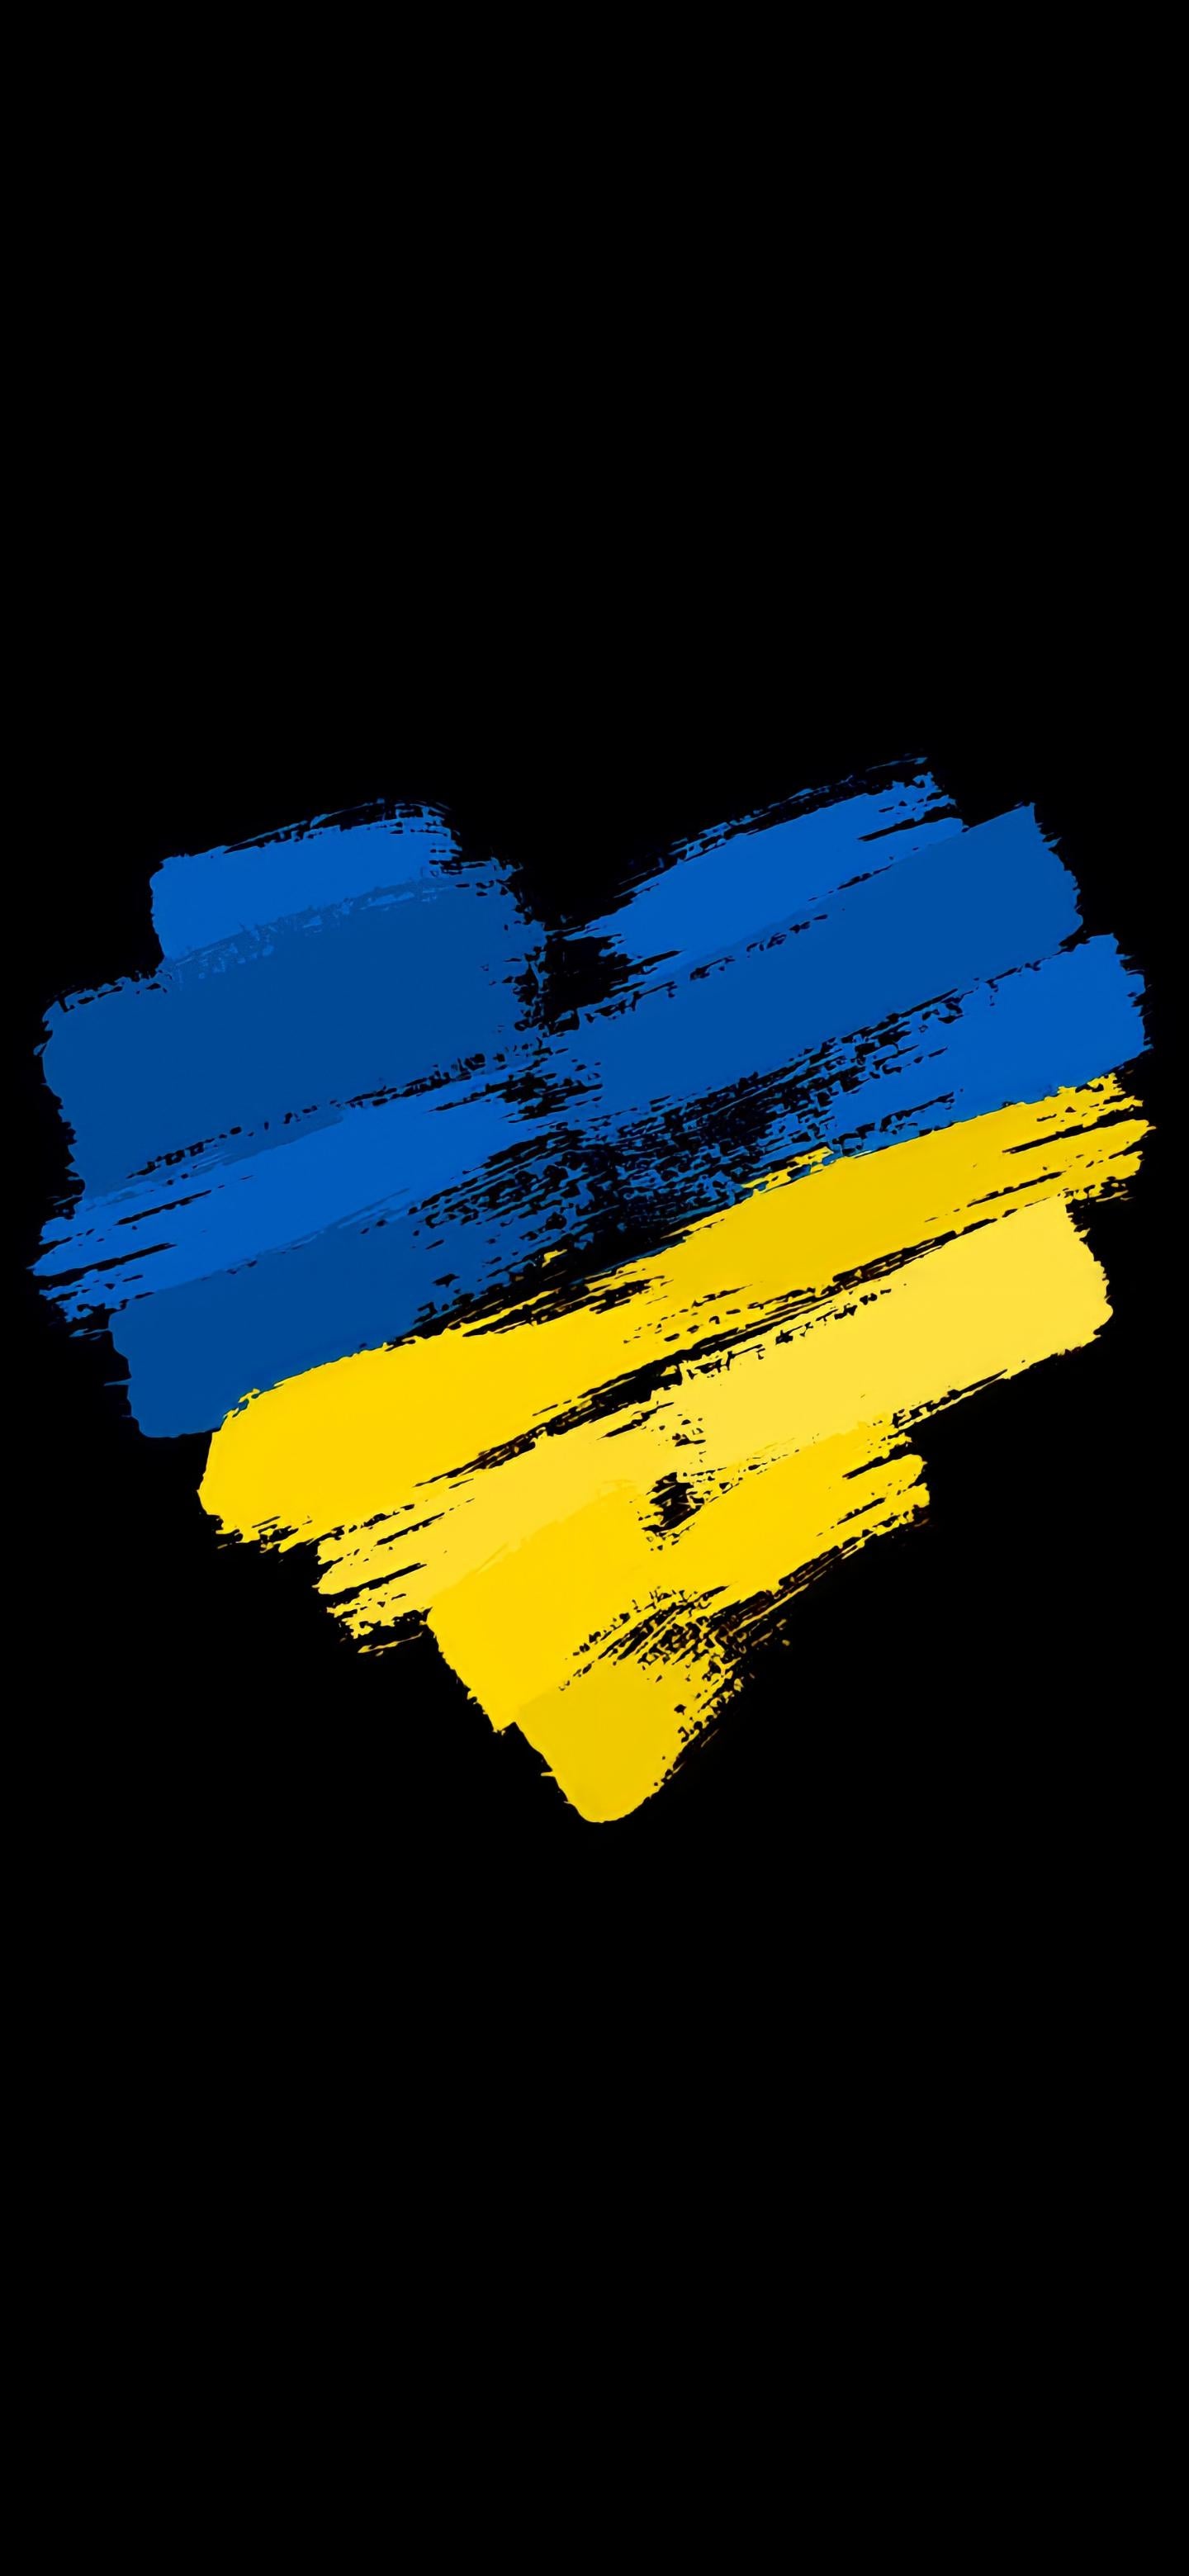 Pray for Ukraine - [1440x3120]